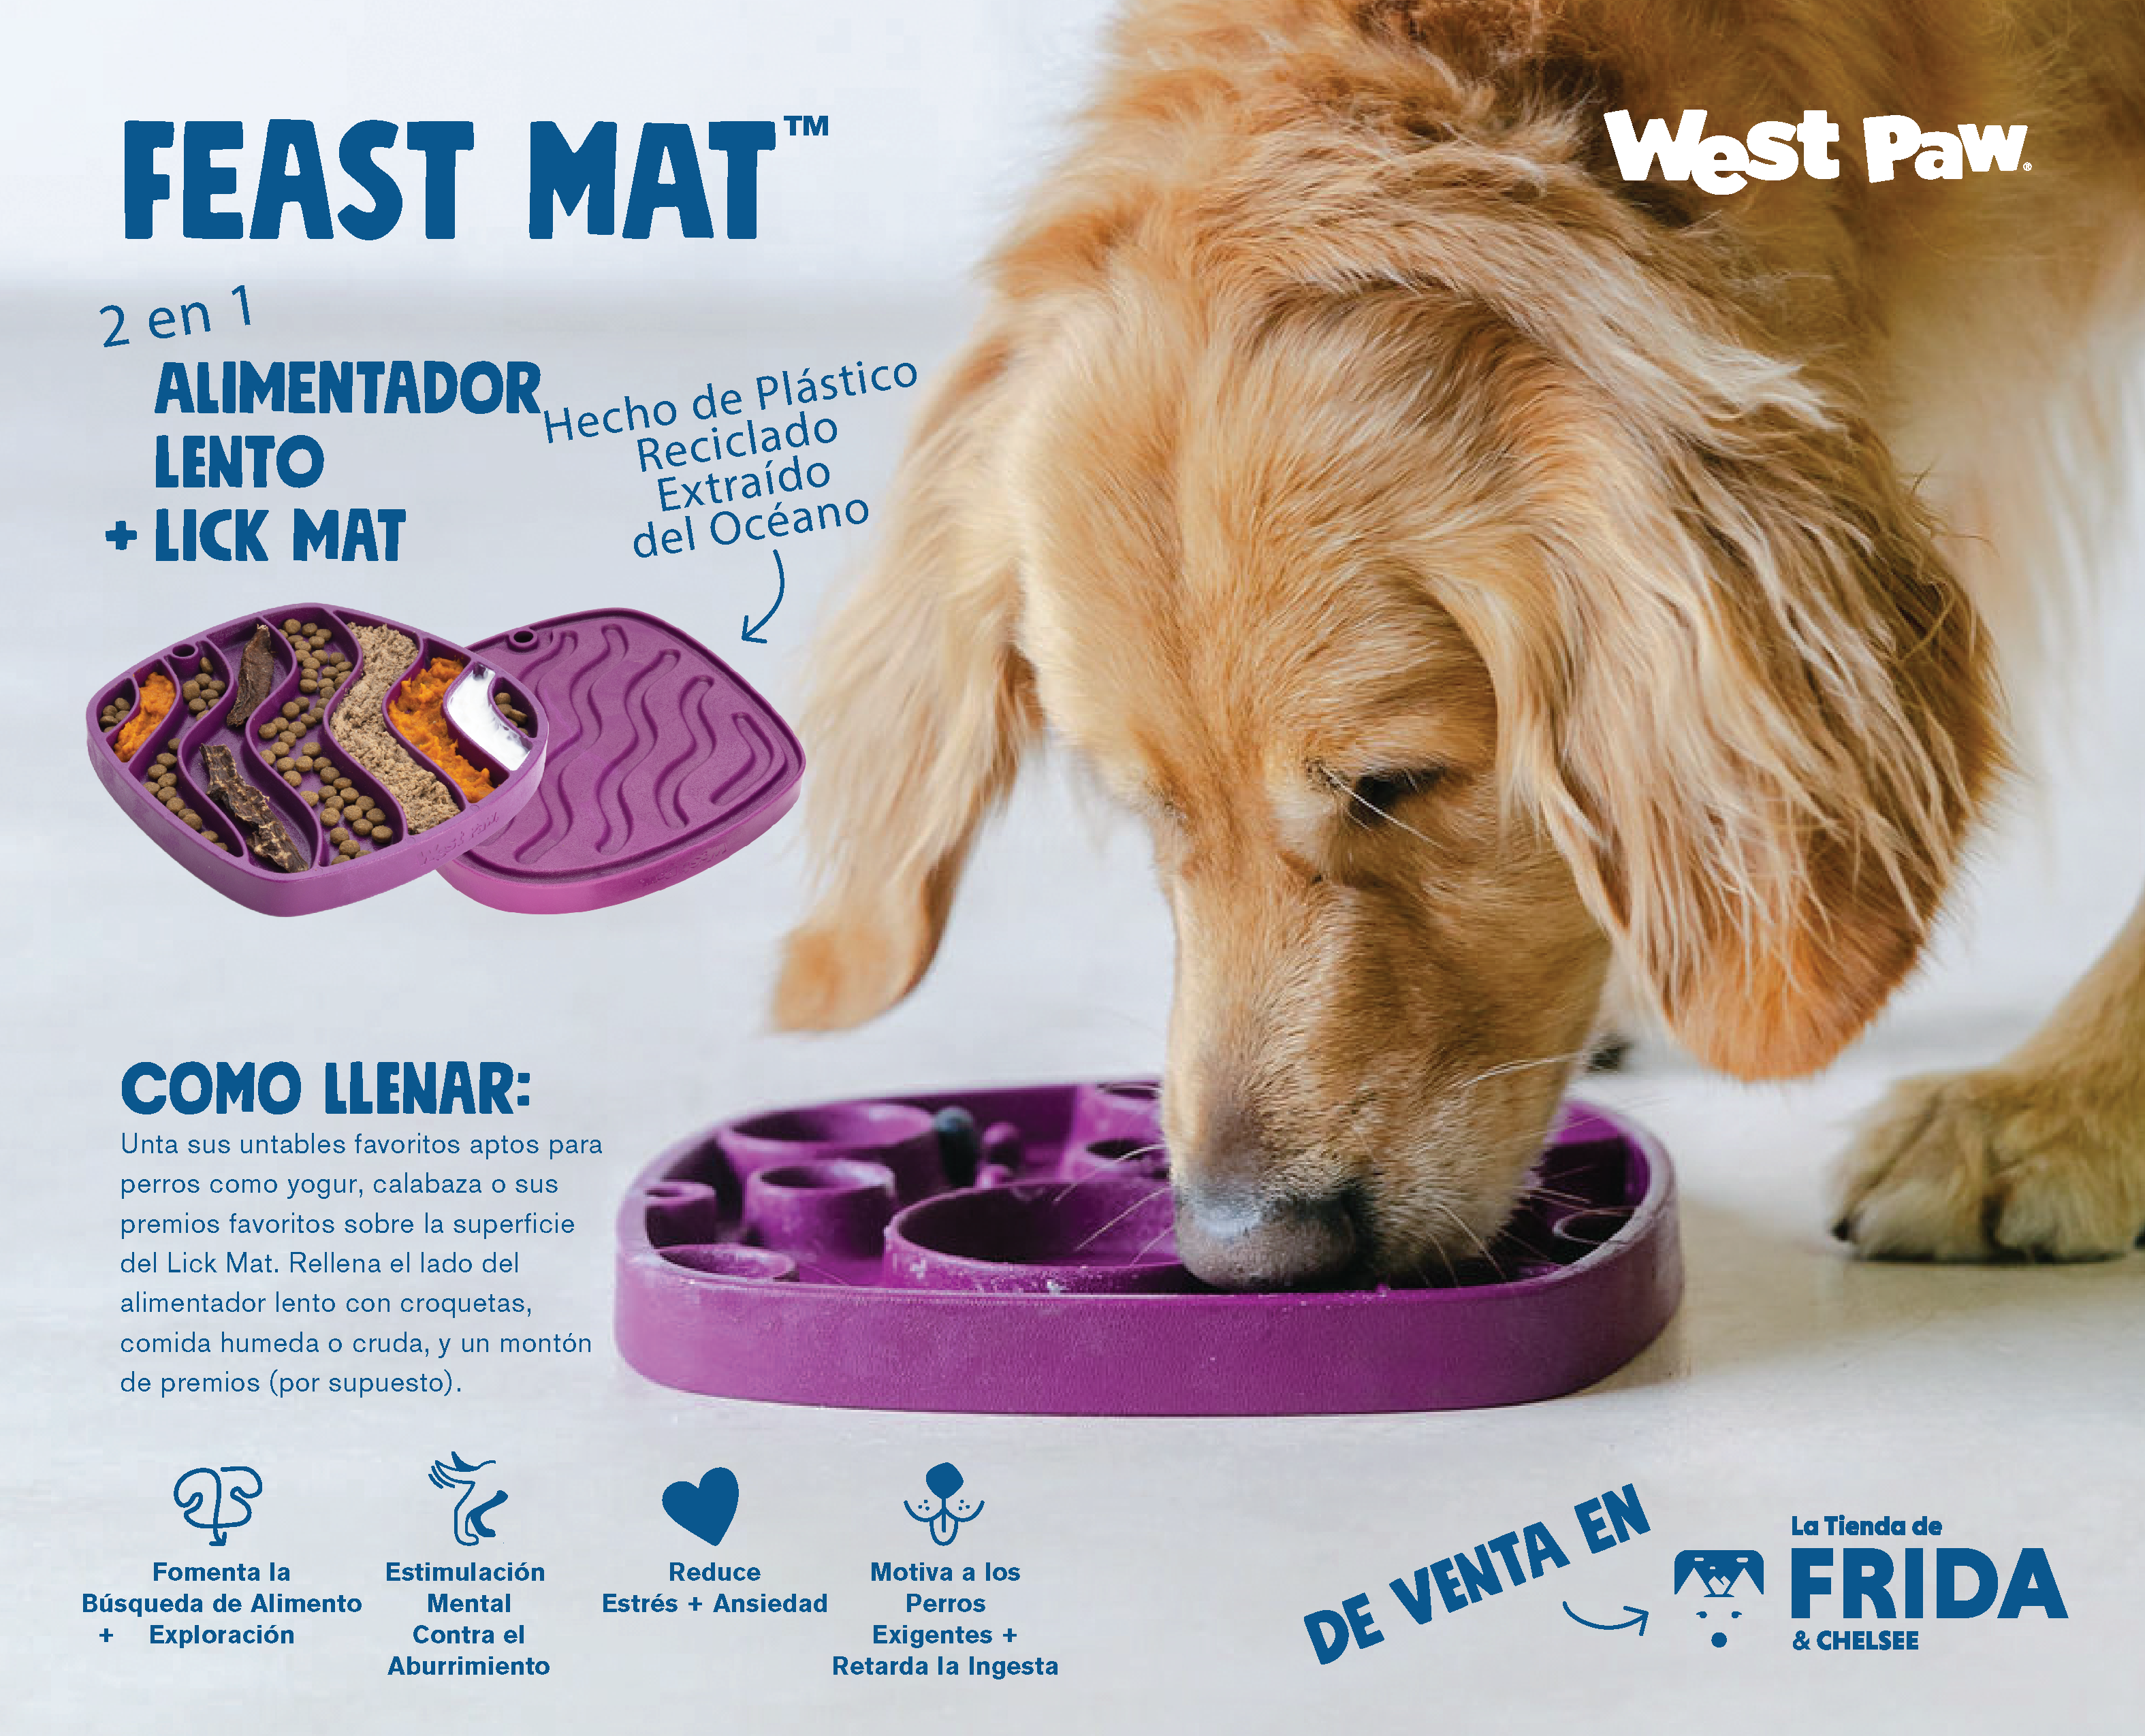 Feast Mat: Alimentador Lento y Lick Mat Verde - Tapete de Lamedura Todo en Uno de West Paw